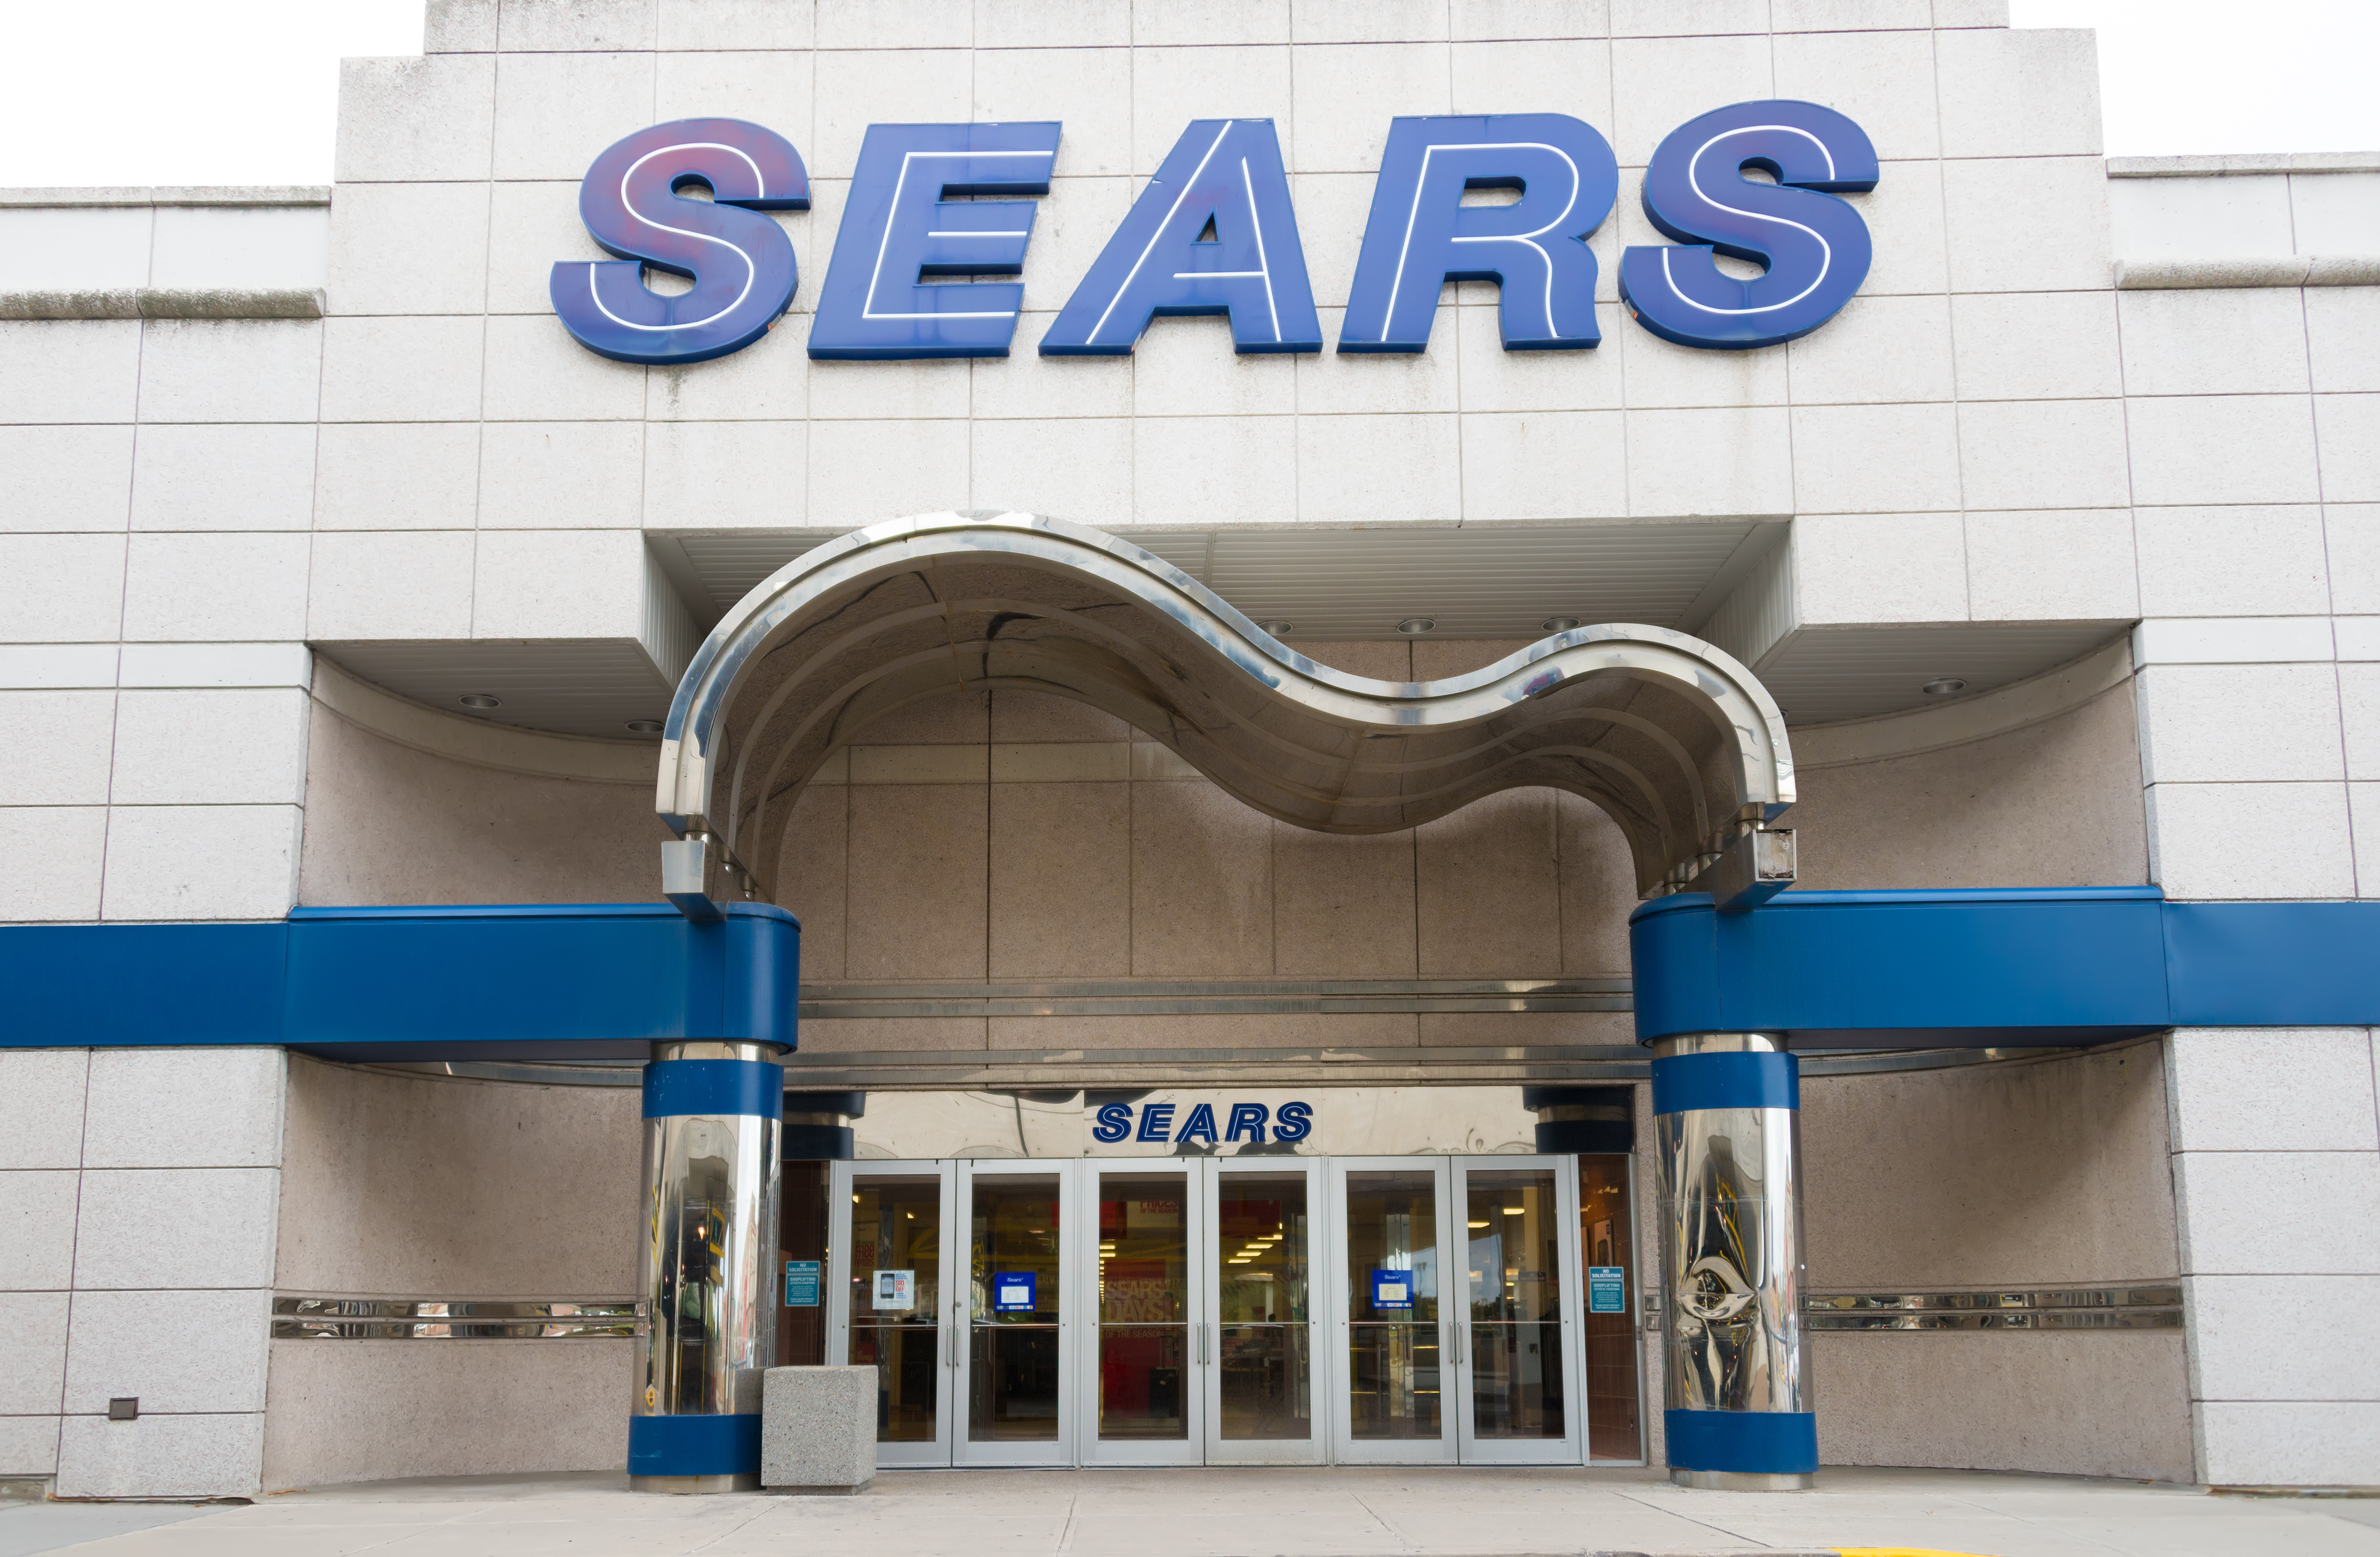 Sears store entrance. Sears, Roebuck &amp; Co. is an American